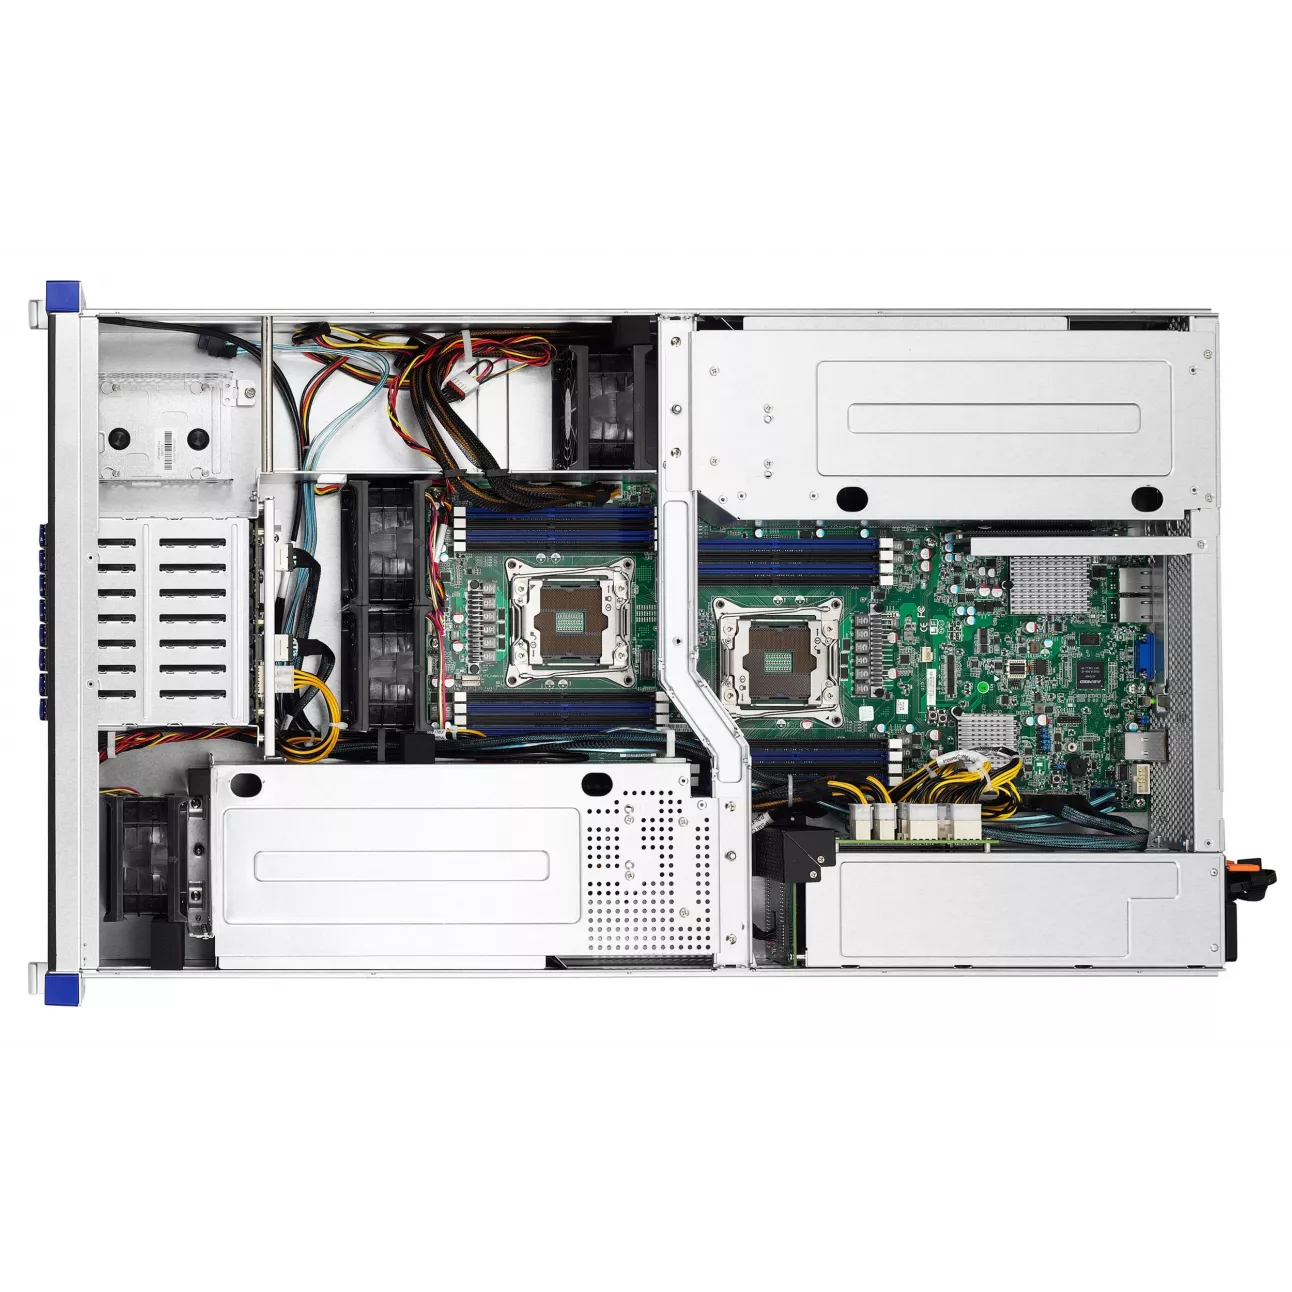 Серверная платформа SNR-SR480R-V3, 2U, E5-2600v3, DDR4, 8xHDD, резервируемый БП